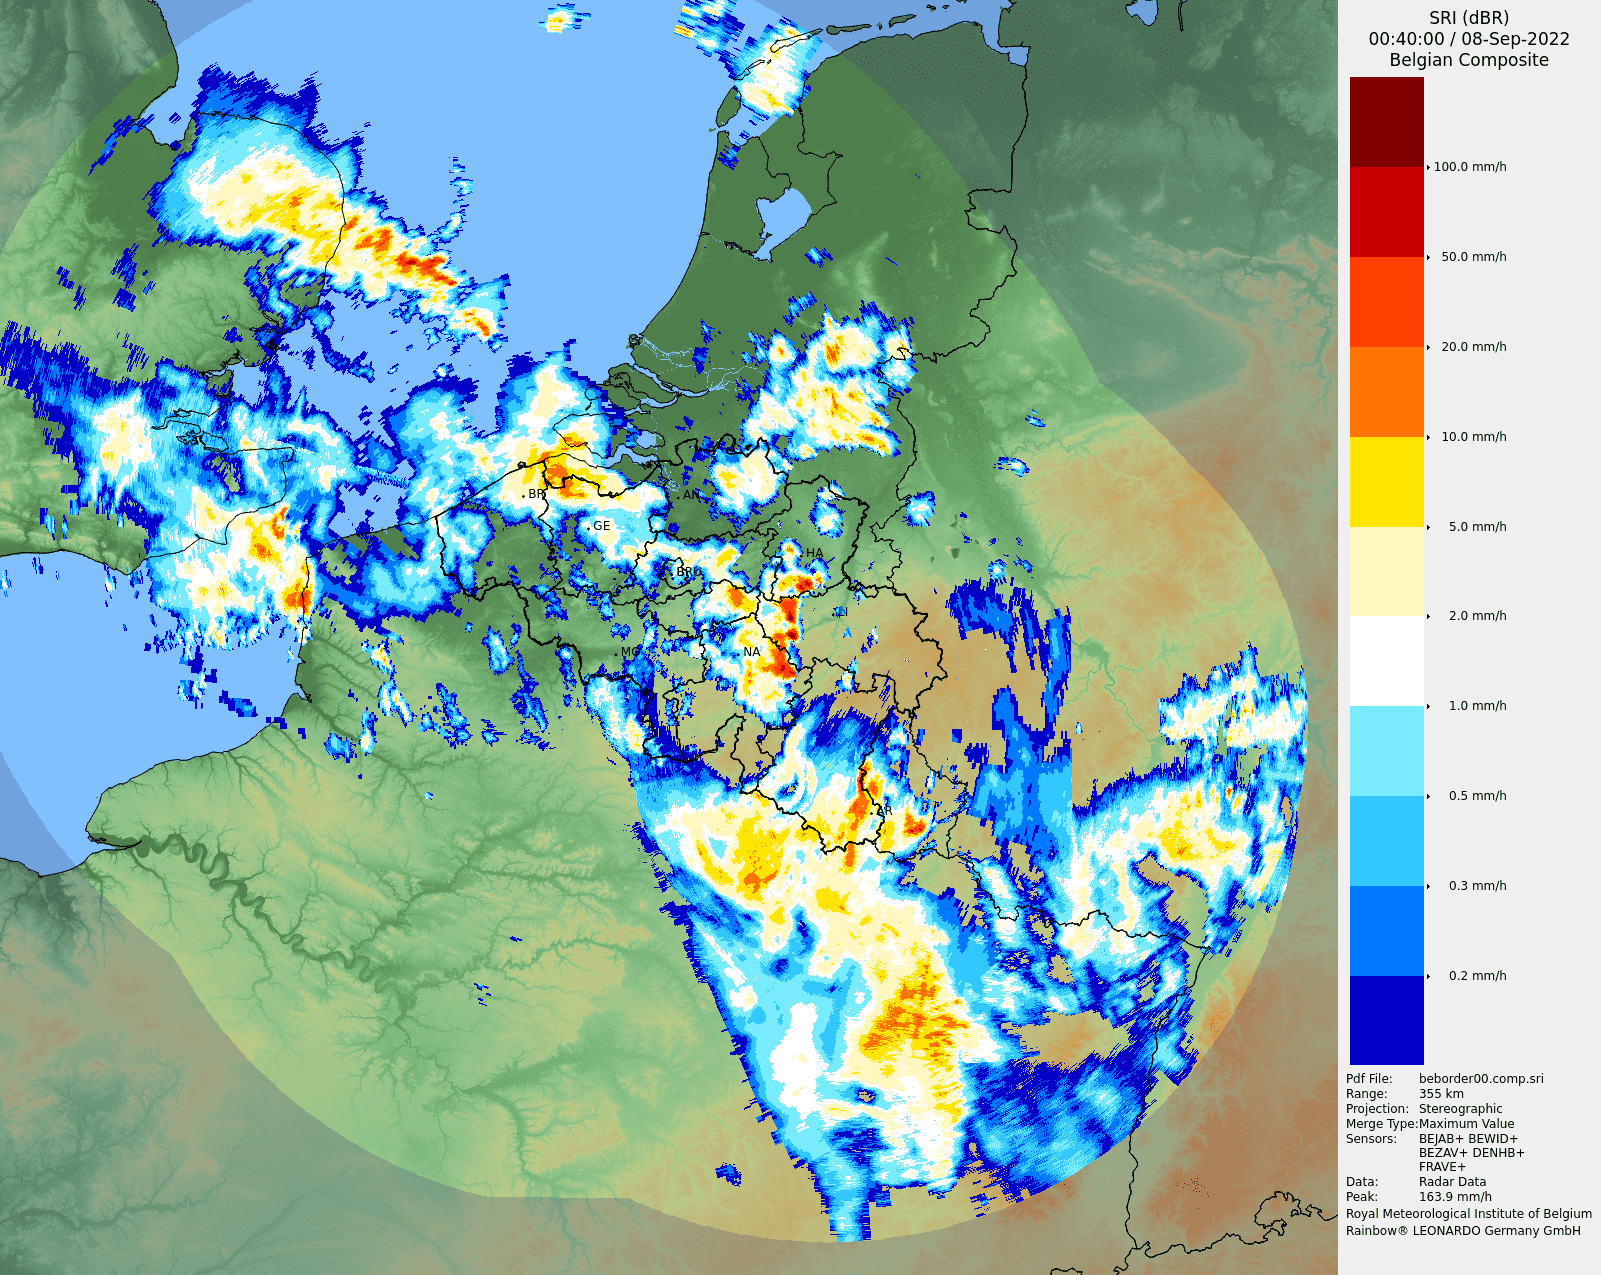 Active precipitation zone during September 2022 in Belgium